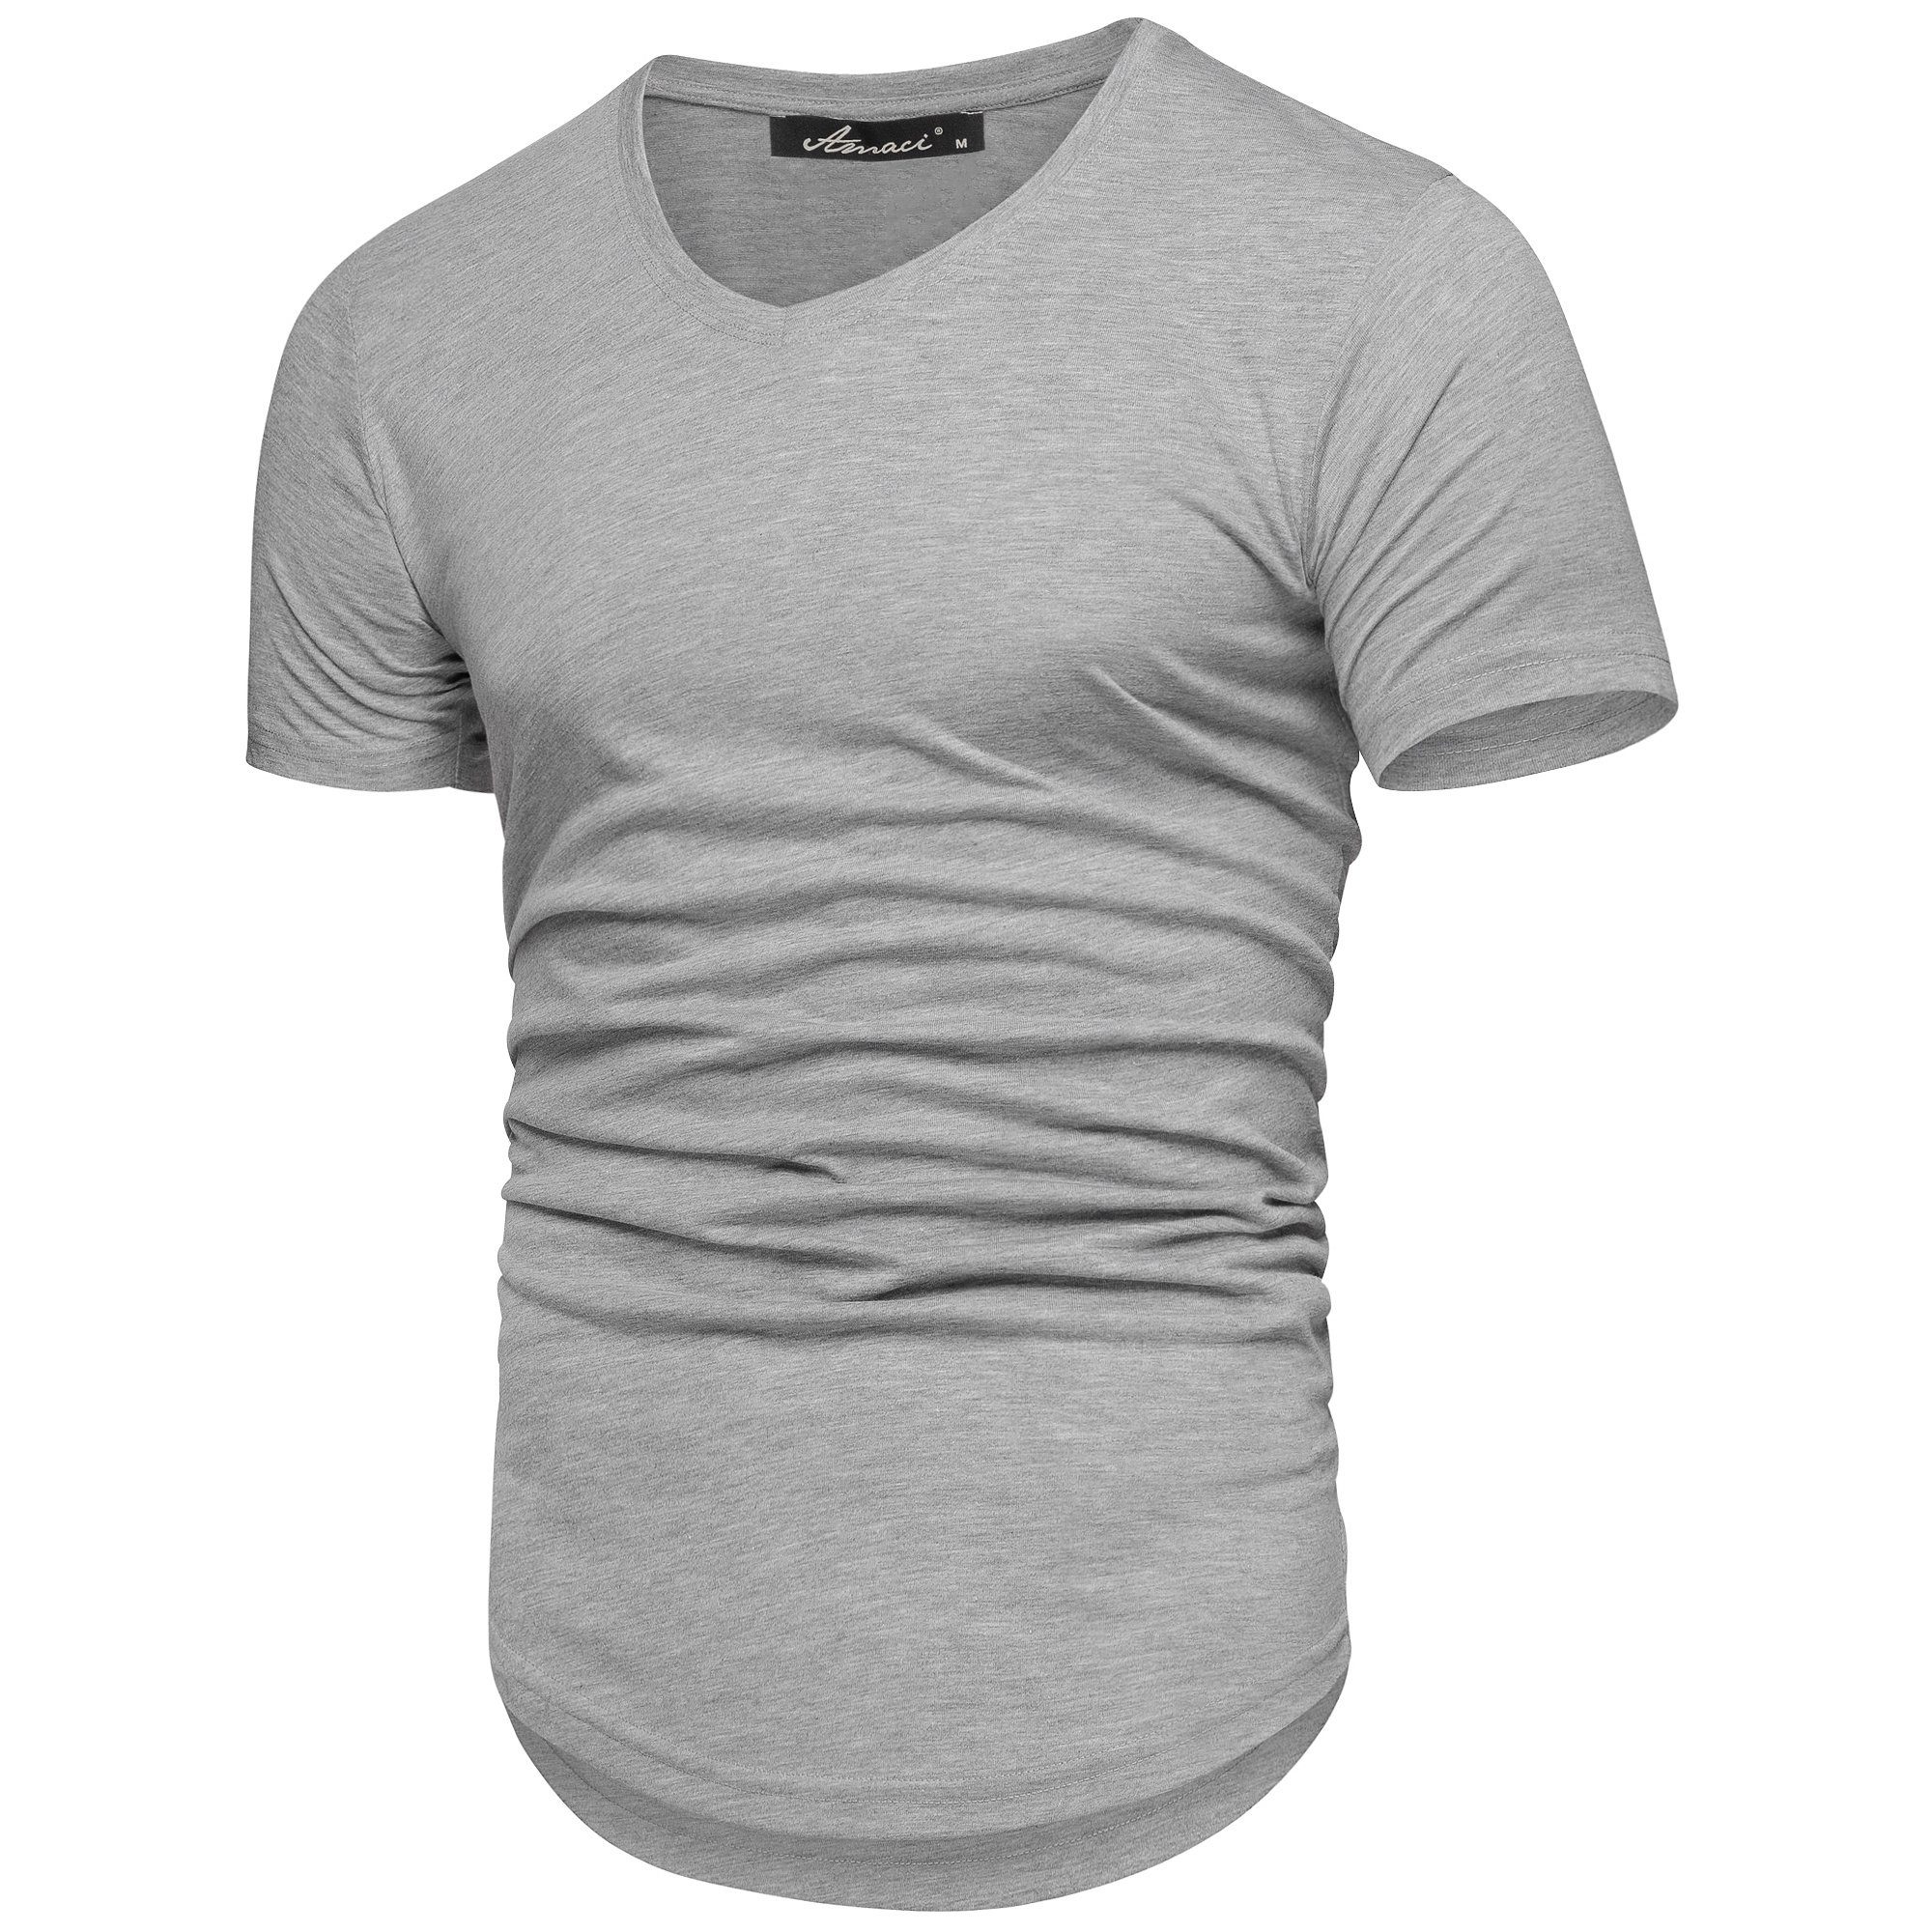 V-Ausschnitt Basic BELLEVUE Melange V-Ausschnitt V-Neck T-Shirt T-Shirt Amaci&Sons Oversize Vintage Shirt mit Grau Herren Basic Oversize